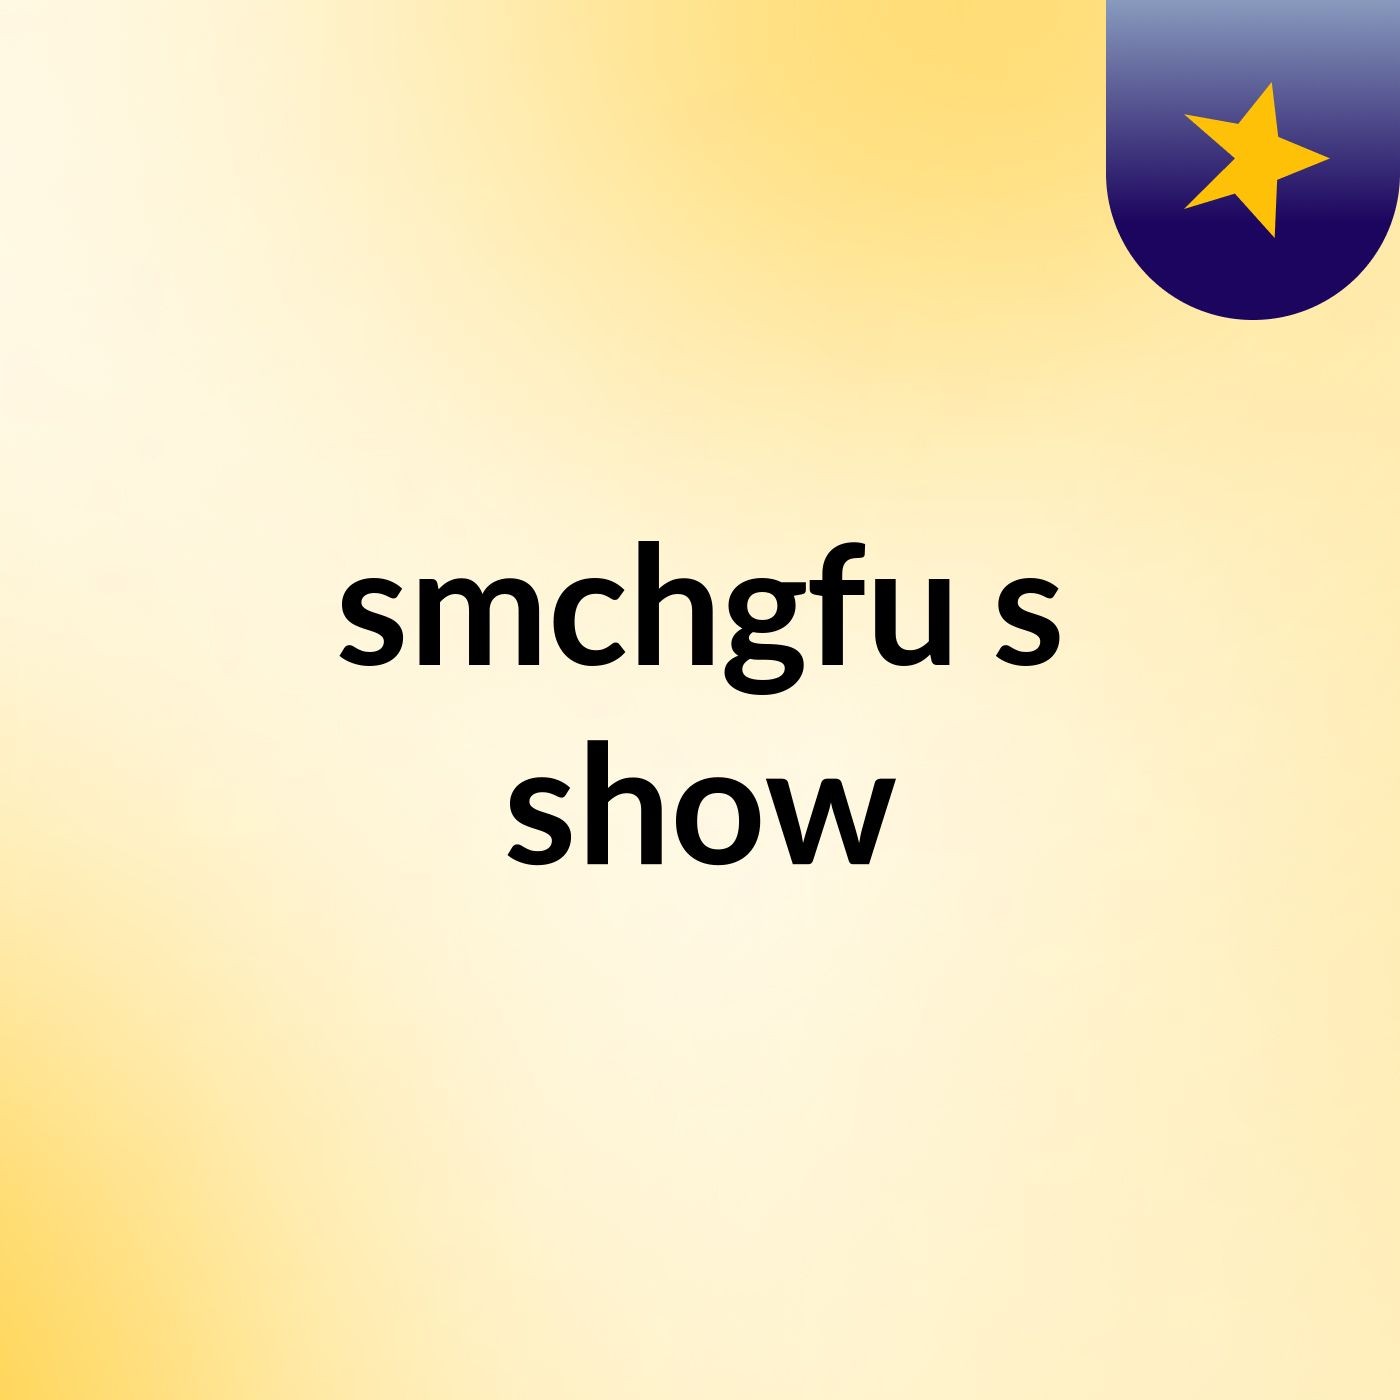 smchgfu's show